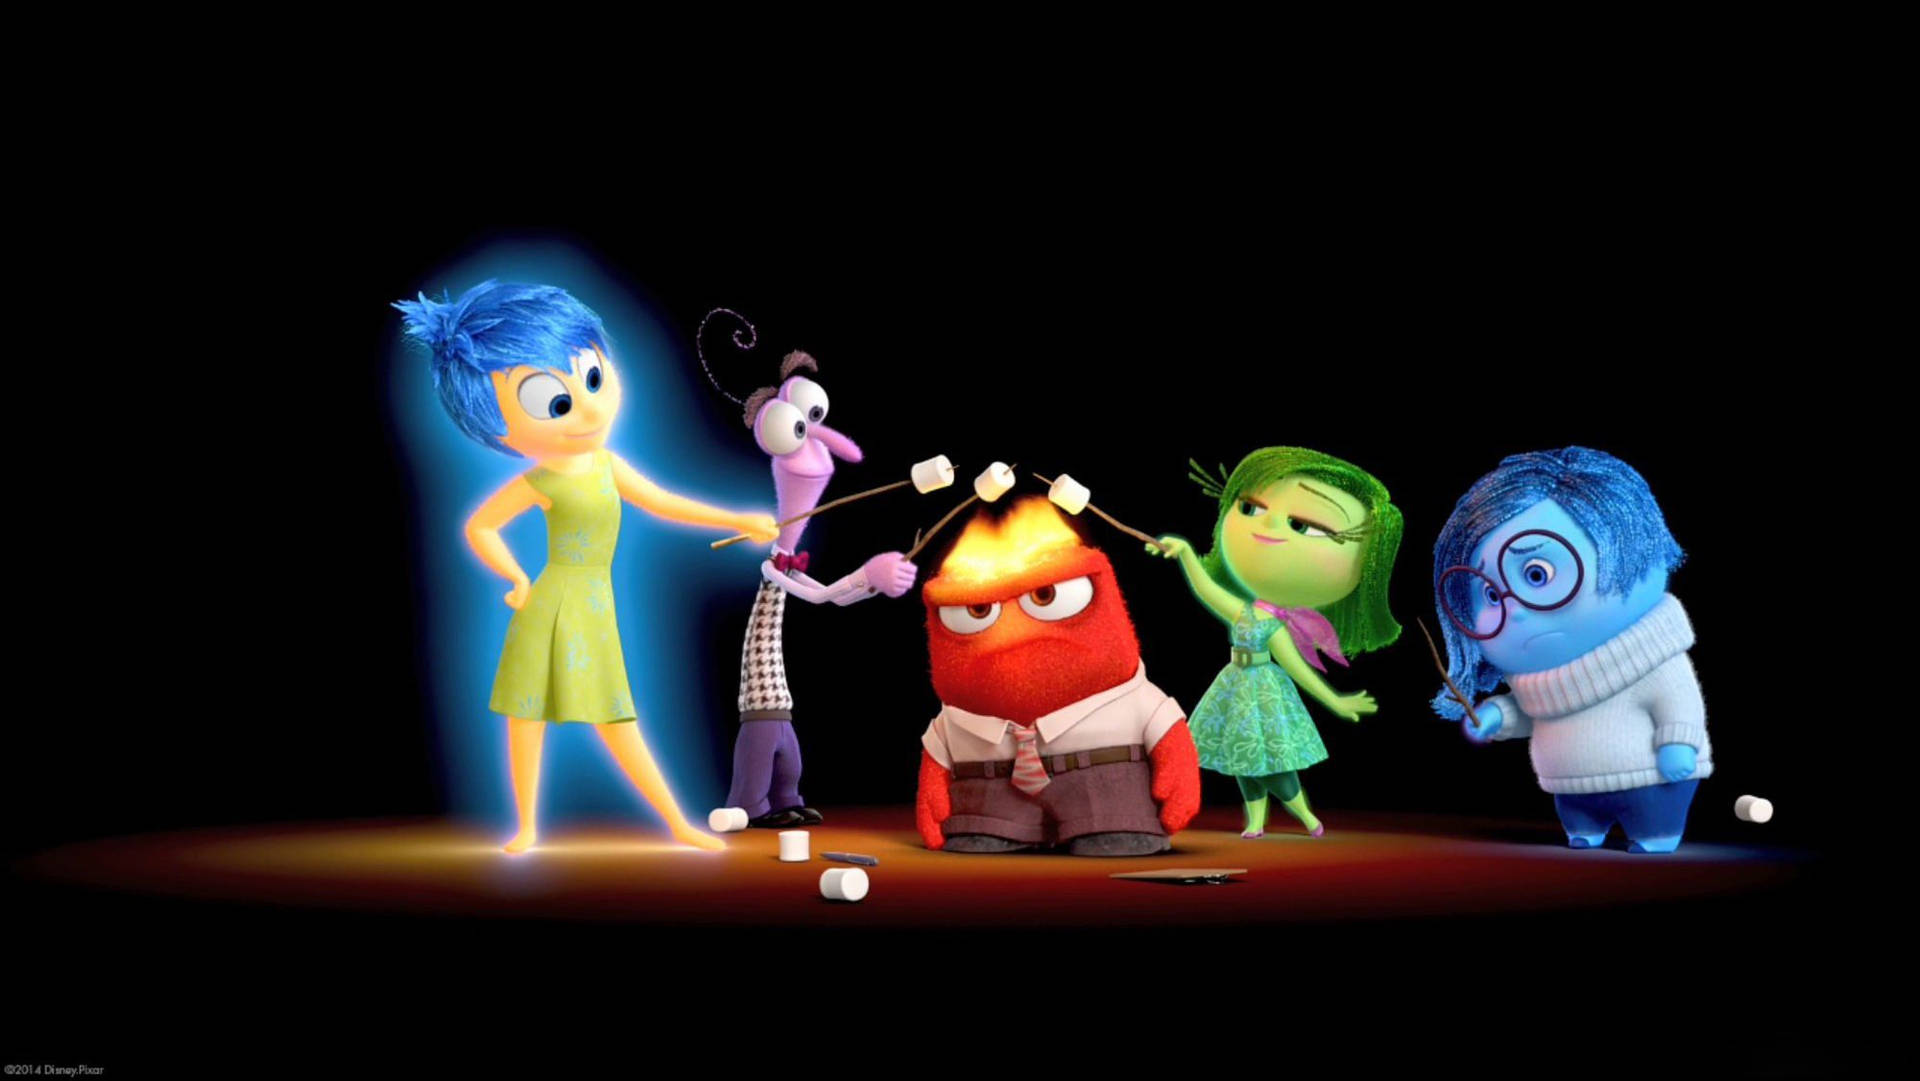 The intense Anger depicted in Disney Pixar's 